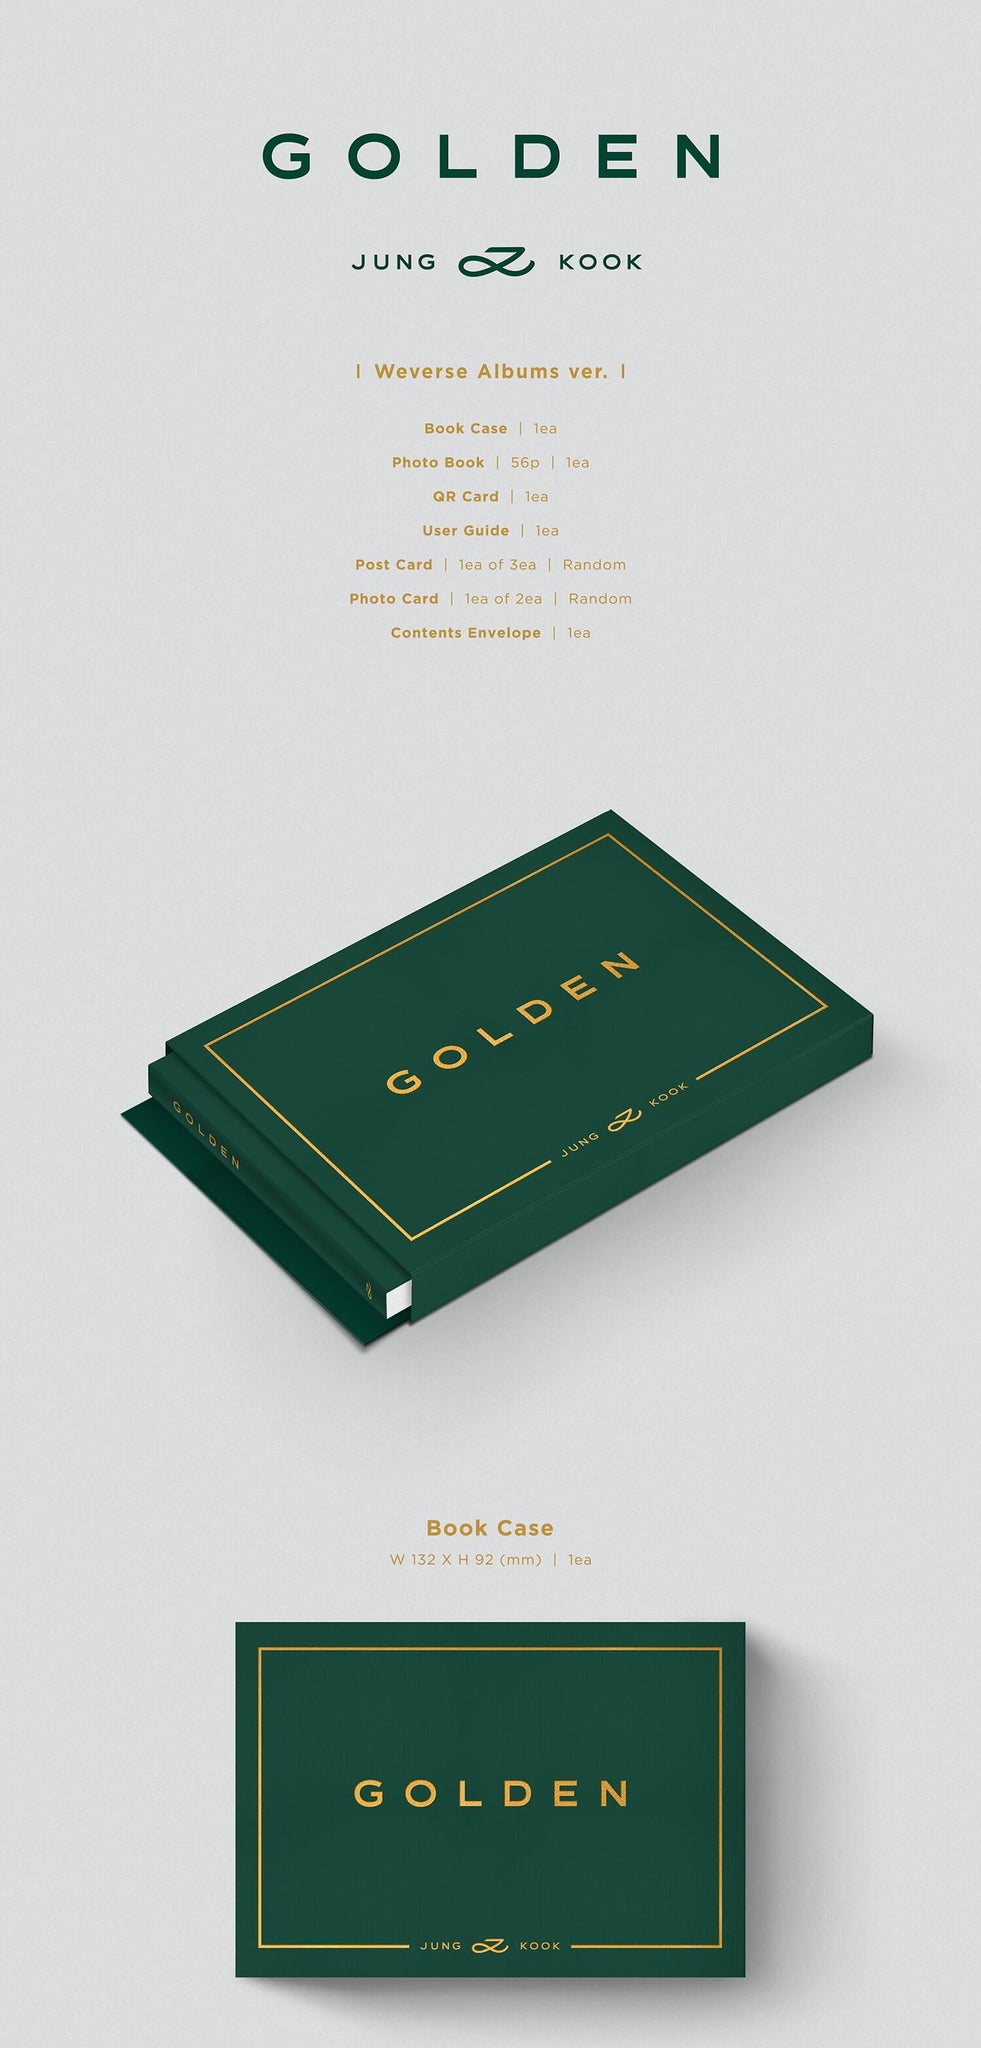 Jung Kook Solo Album GOLDEN - Weverse Albums Version Inclusions Book Case